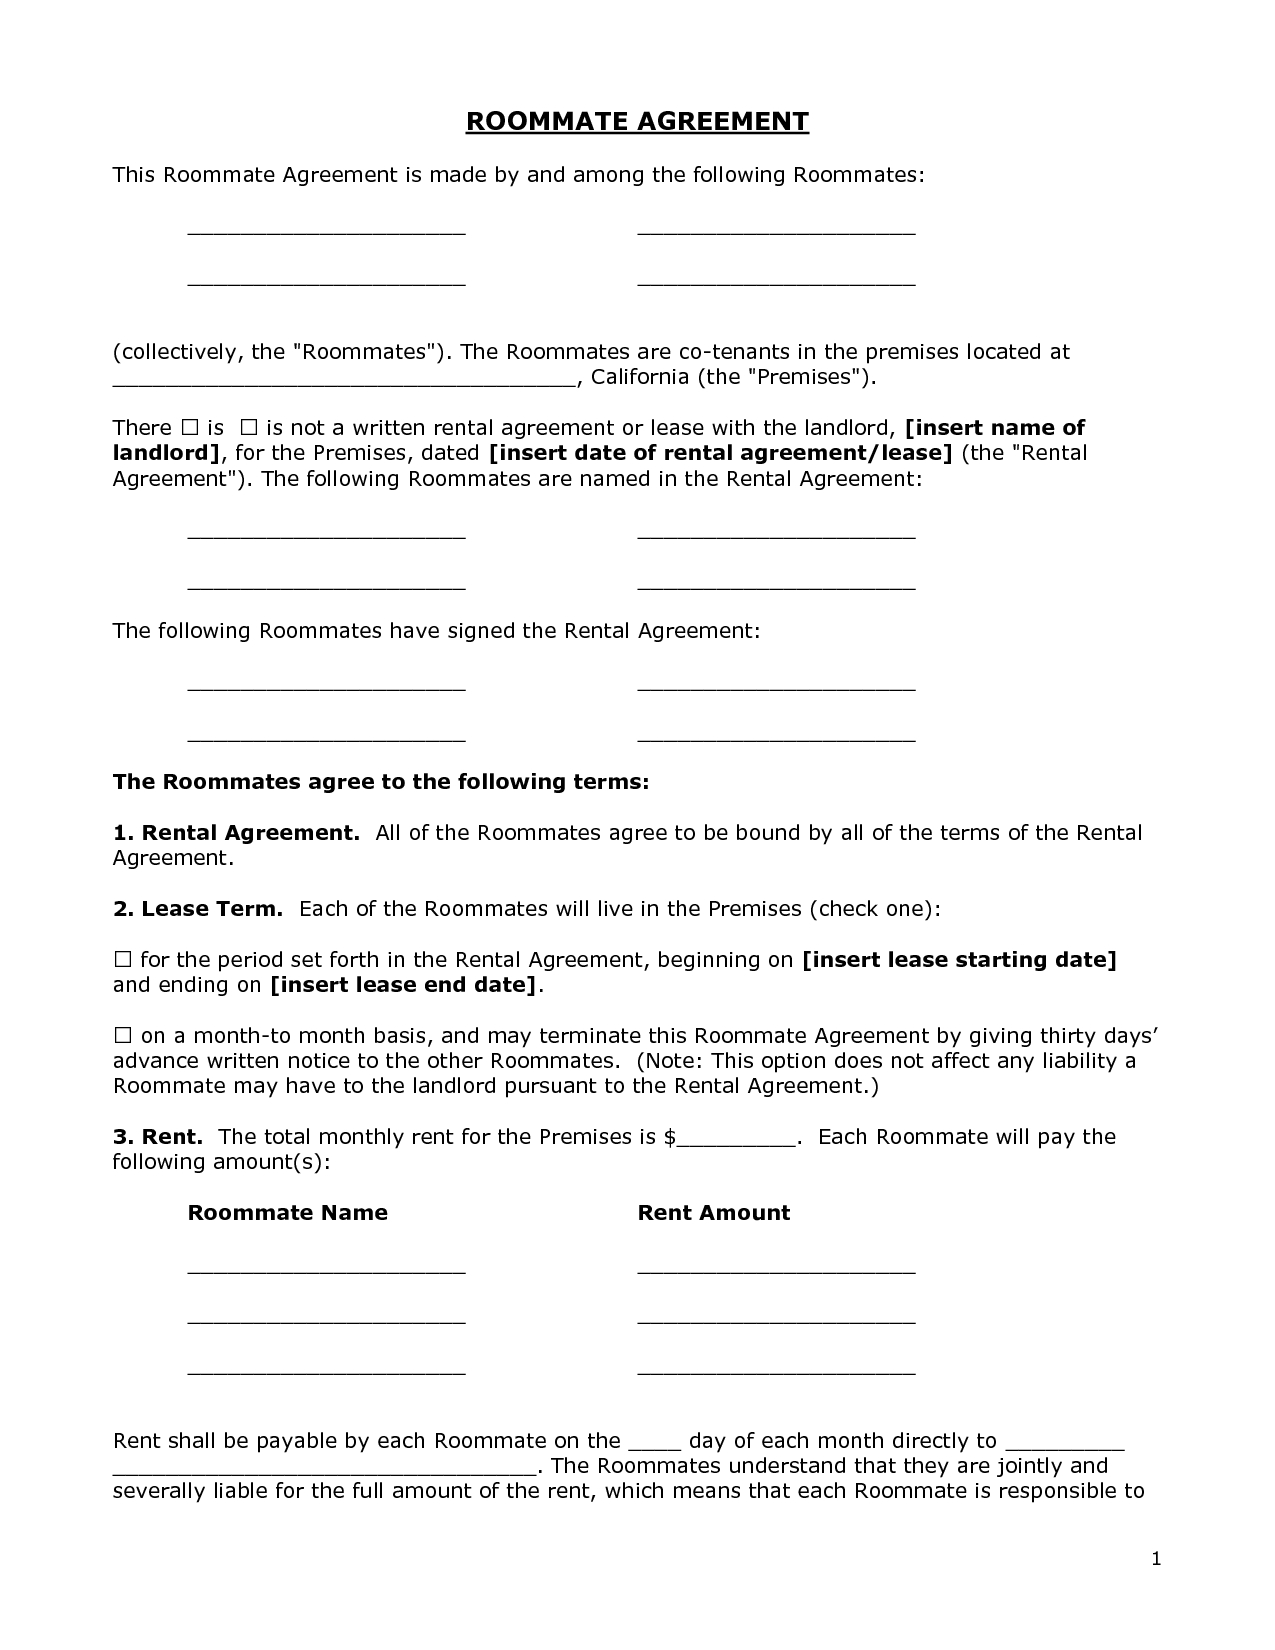 free-florida-roommate-room-rental-agreement-template-pdf-word